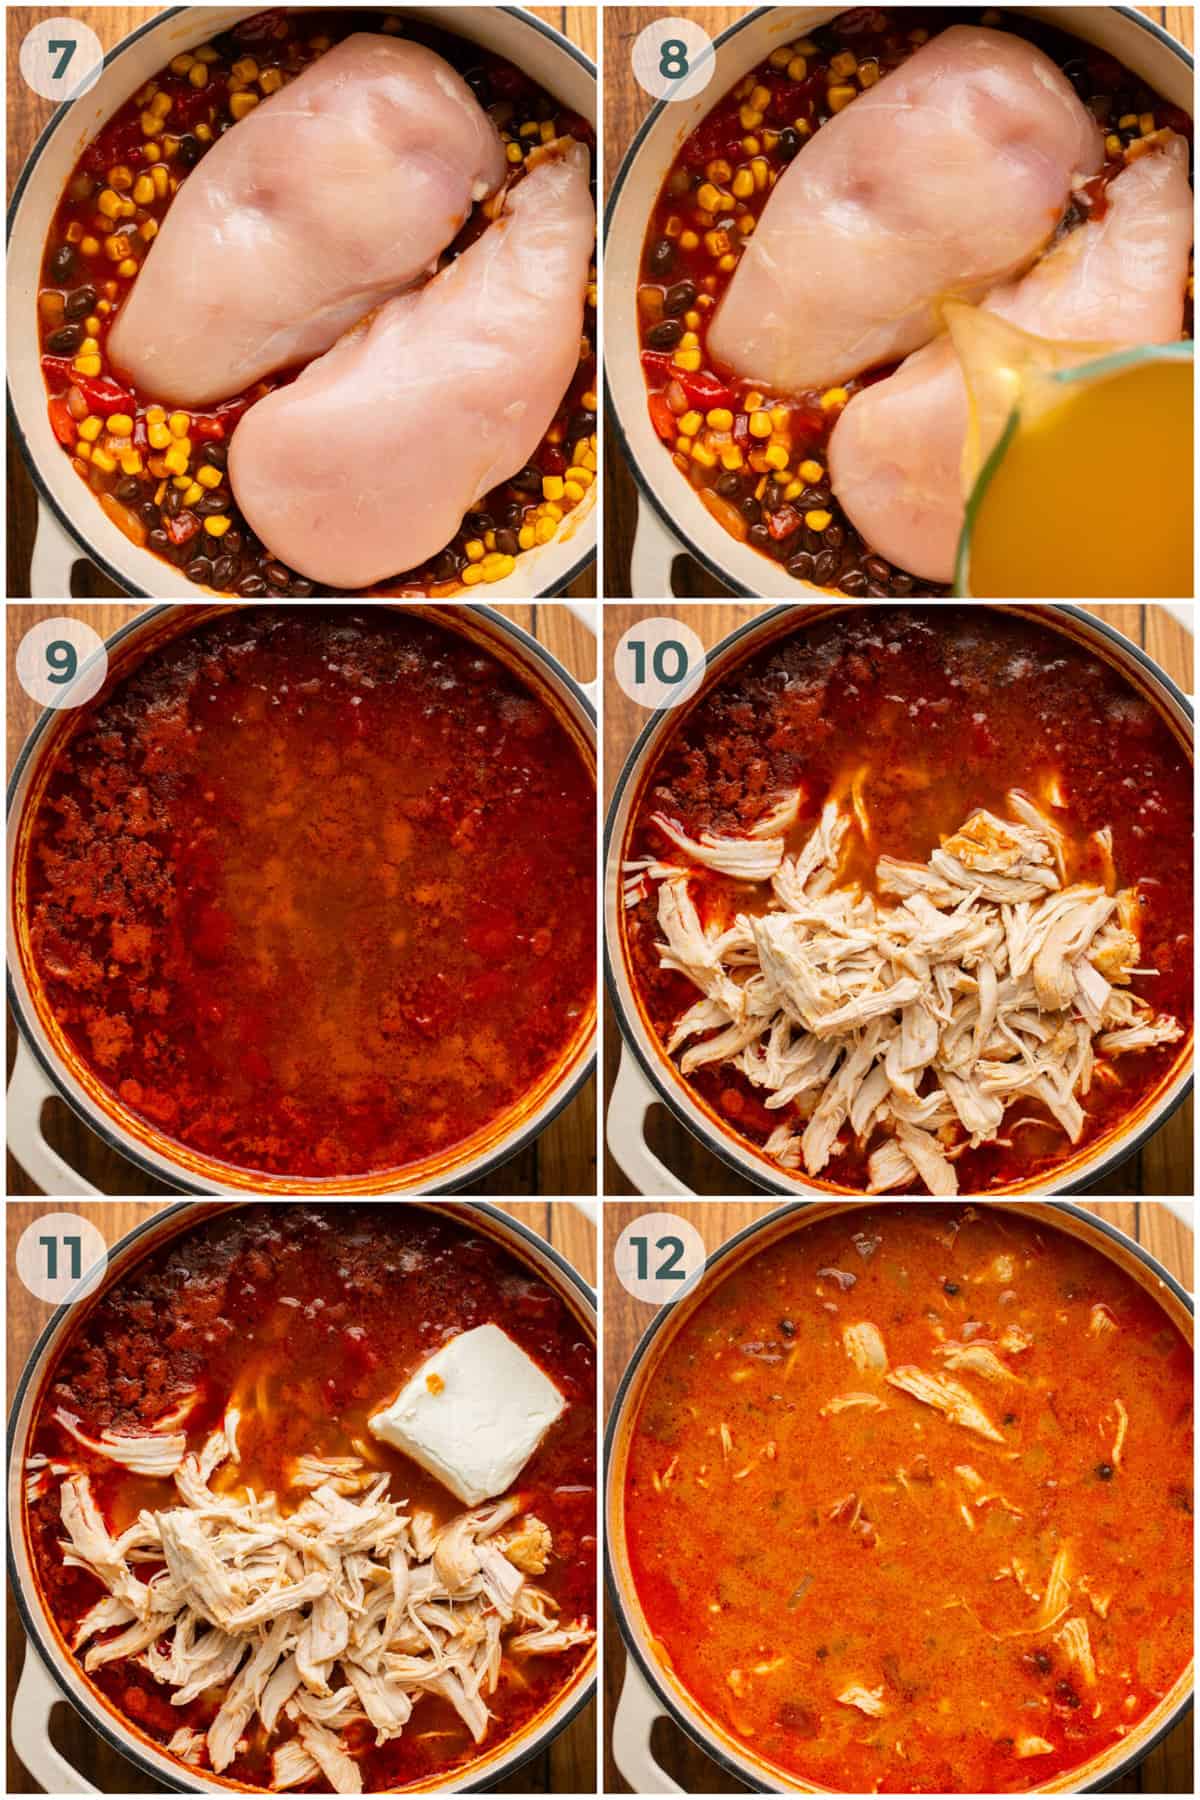 steps 7-12 of preparing chicken tortilla soup